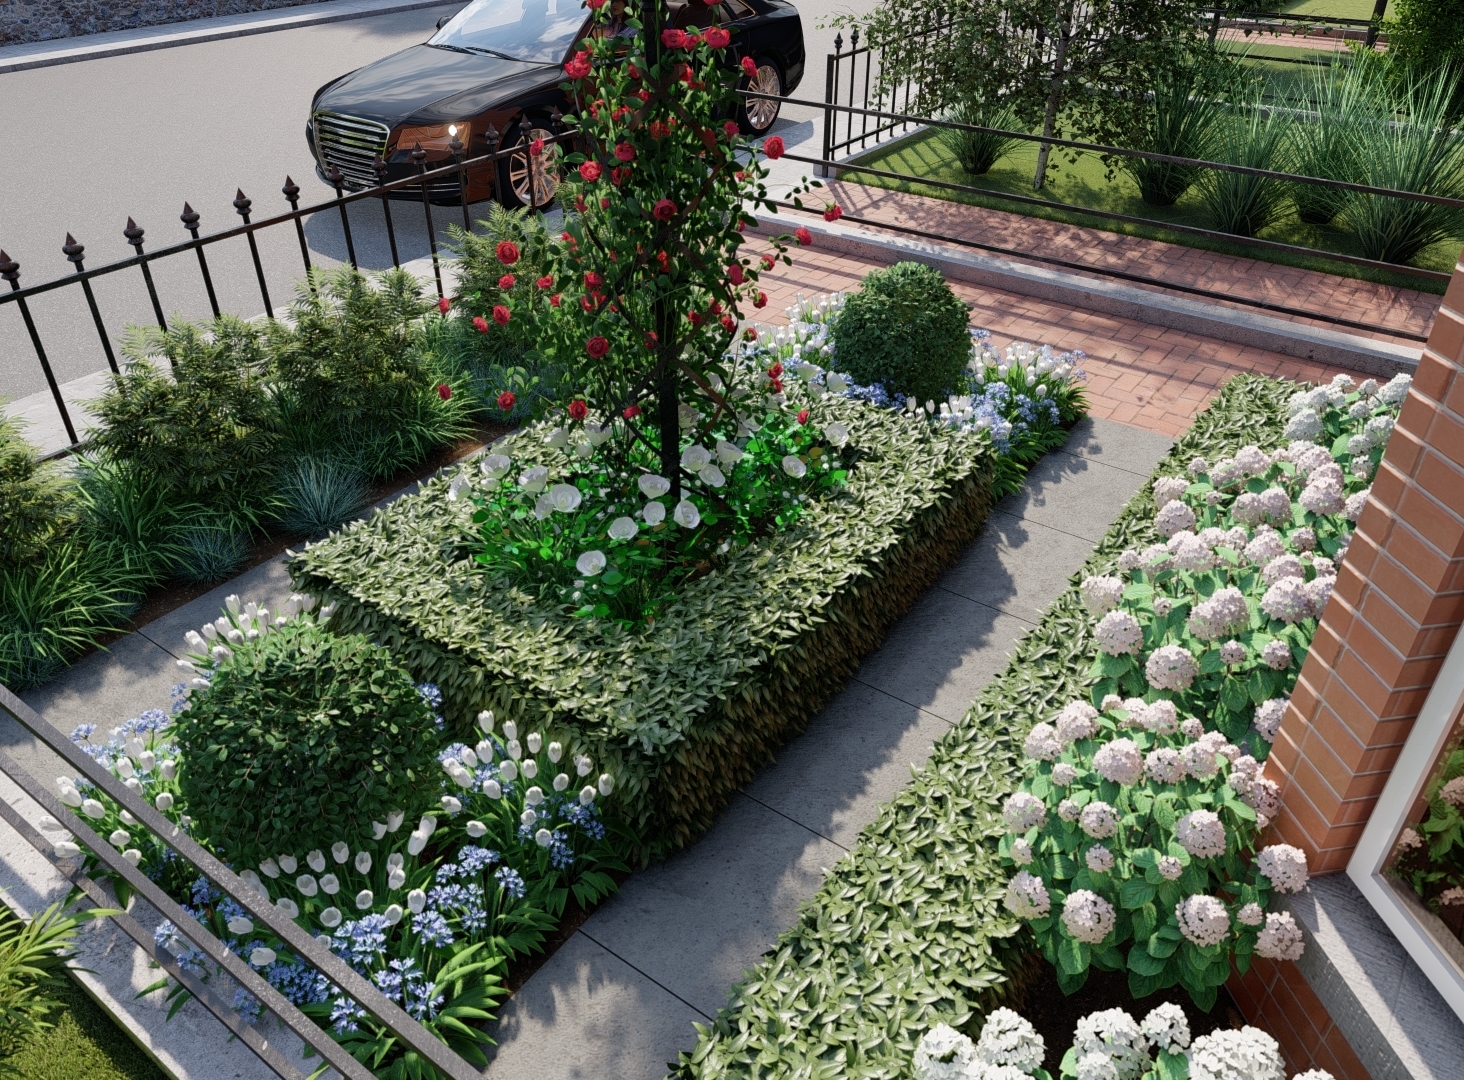 Garden Design featuring a traditional blend of formal & informal planting | Garden Design Terenure Dublin 6W